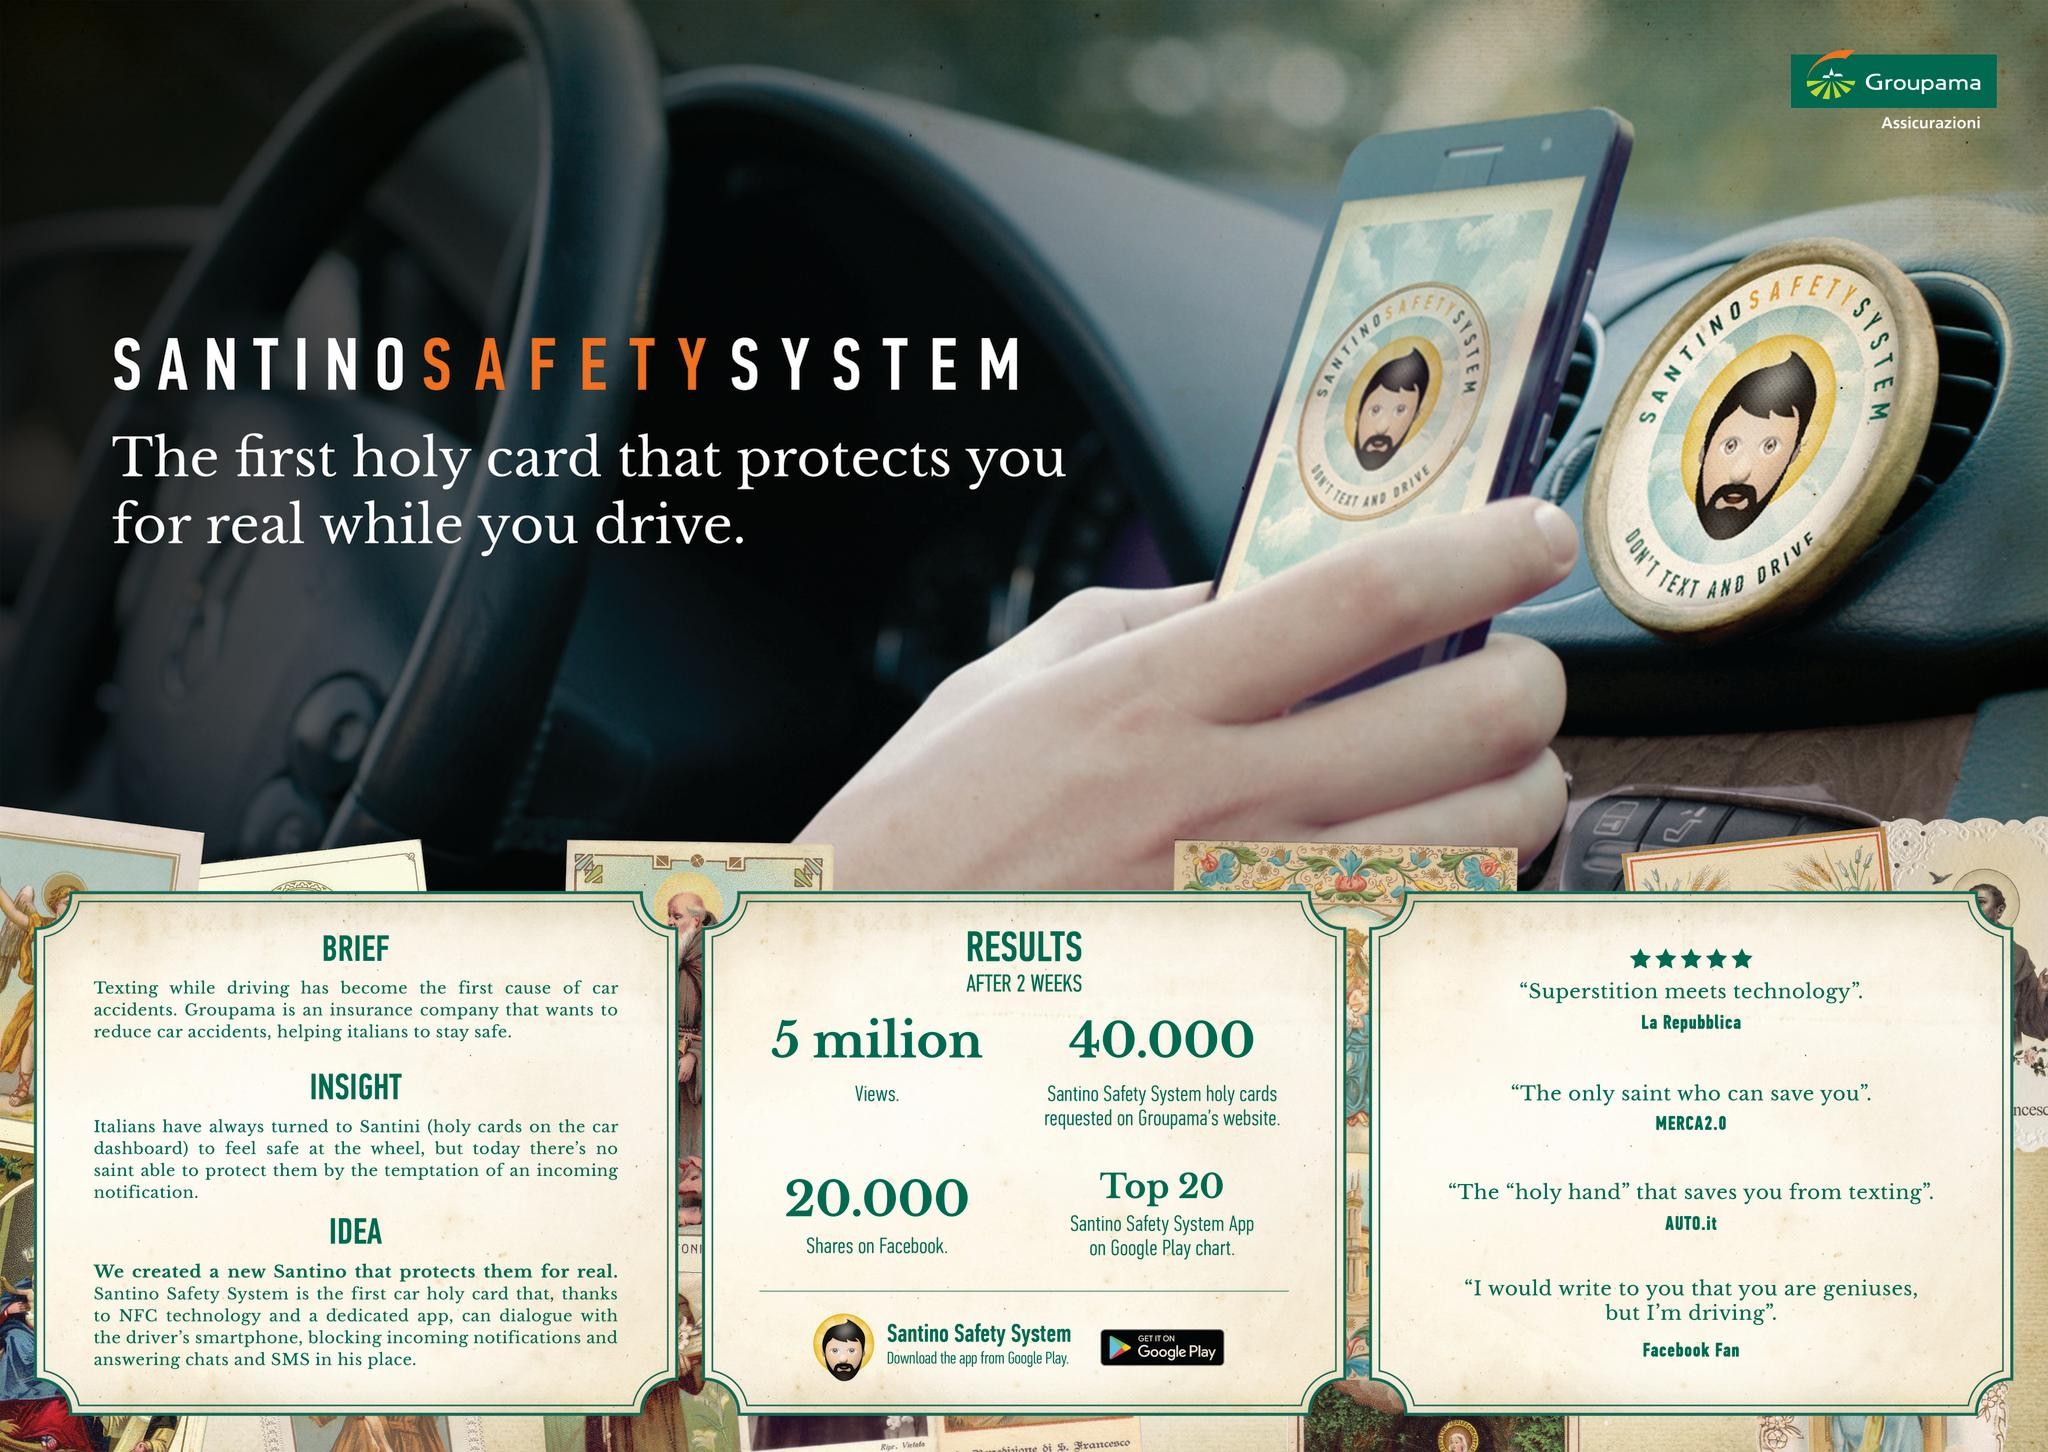 Santino Safety System